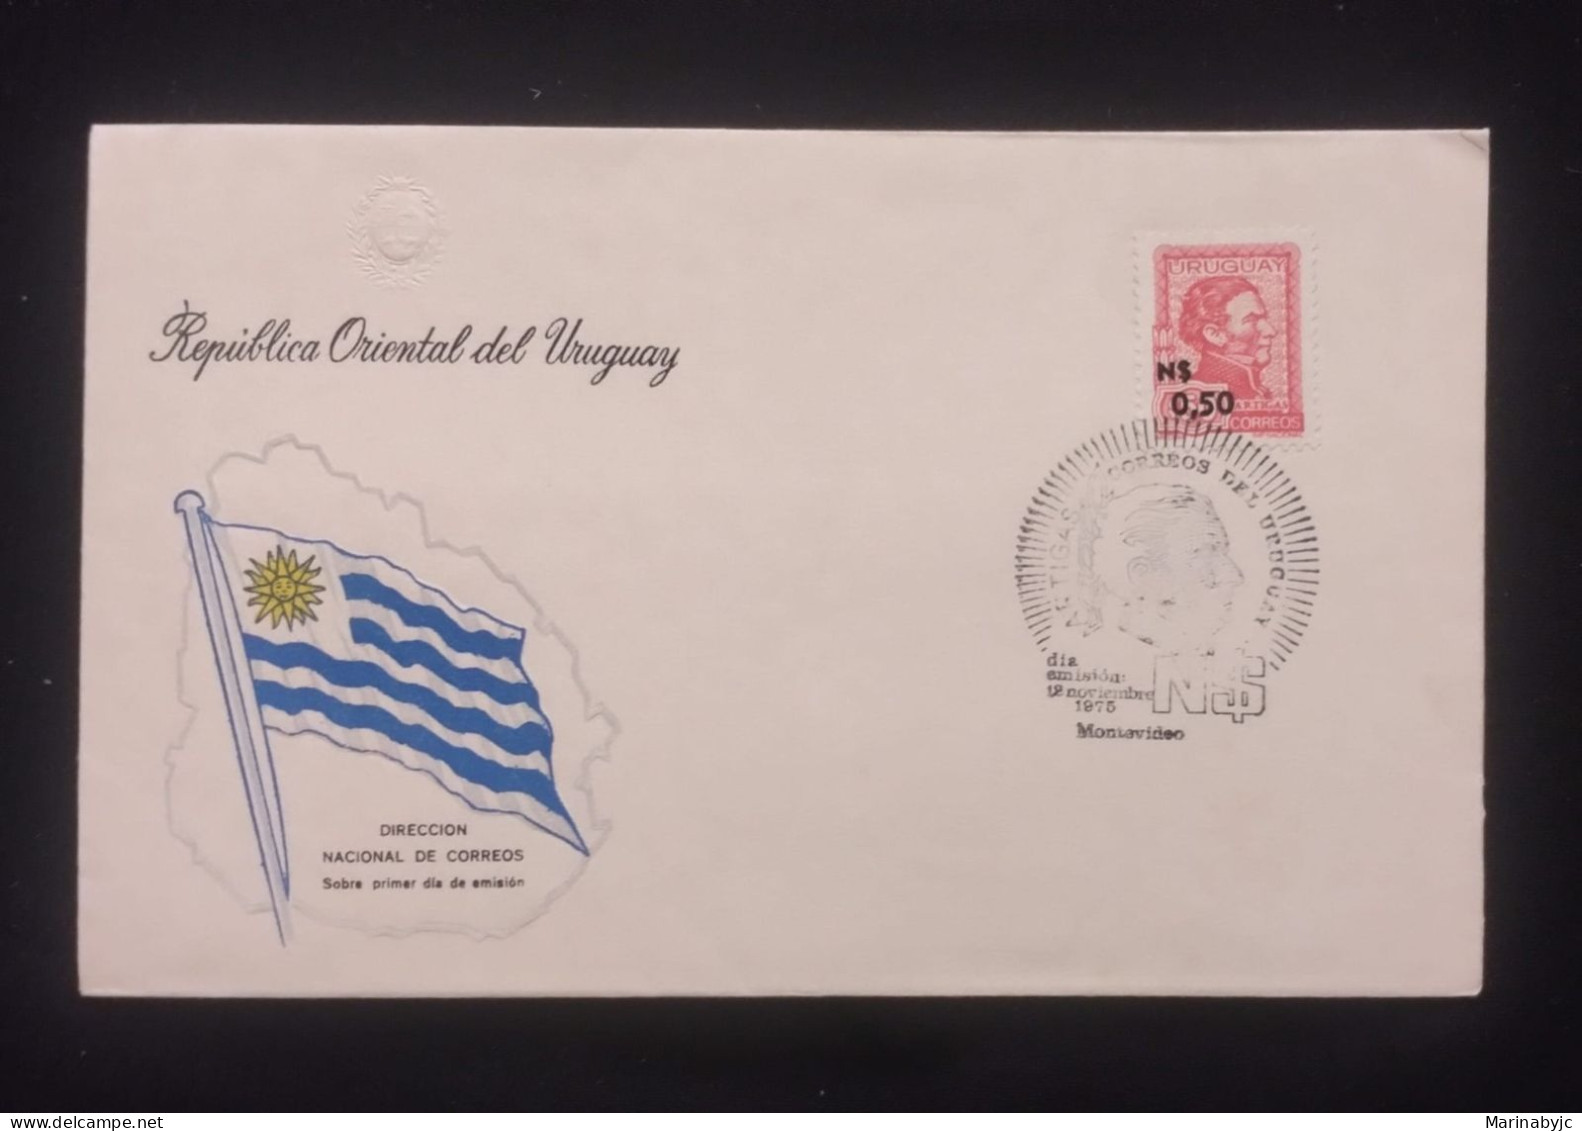 D)1975, URUGUAY, FIRST DAY COVER, ISSUE, GENERAL JOSÉ GERVASIO ARTIGAS, 1764-1850, OVERLOADED, FDC - Uruguay